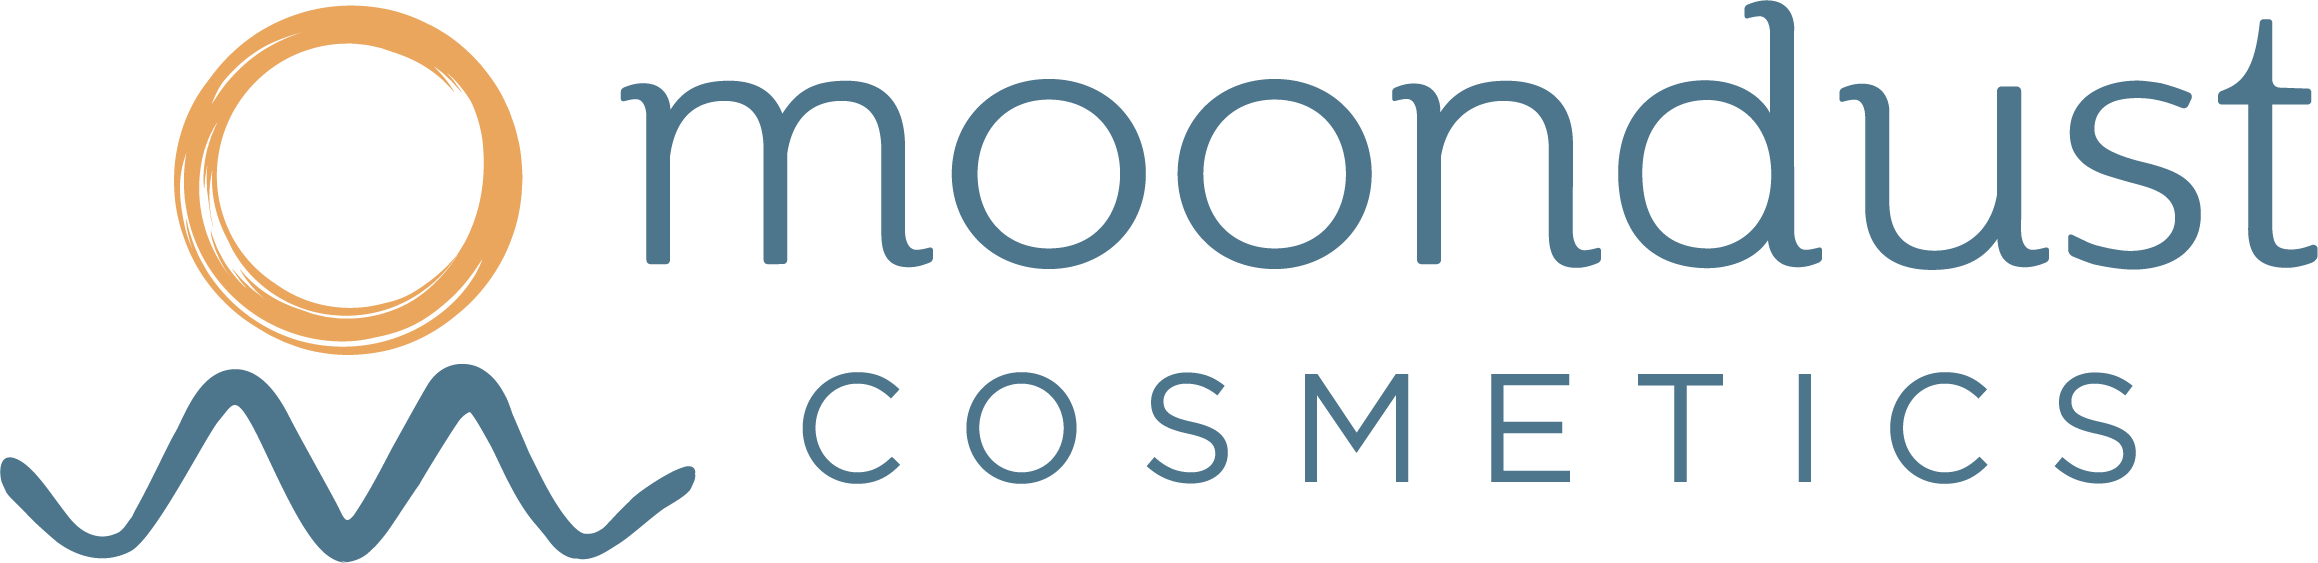 Moondust Cosmetics Staging